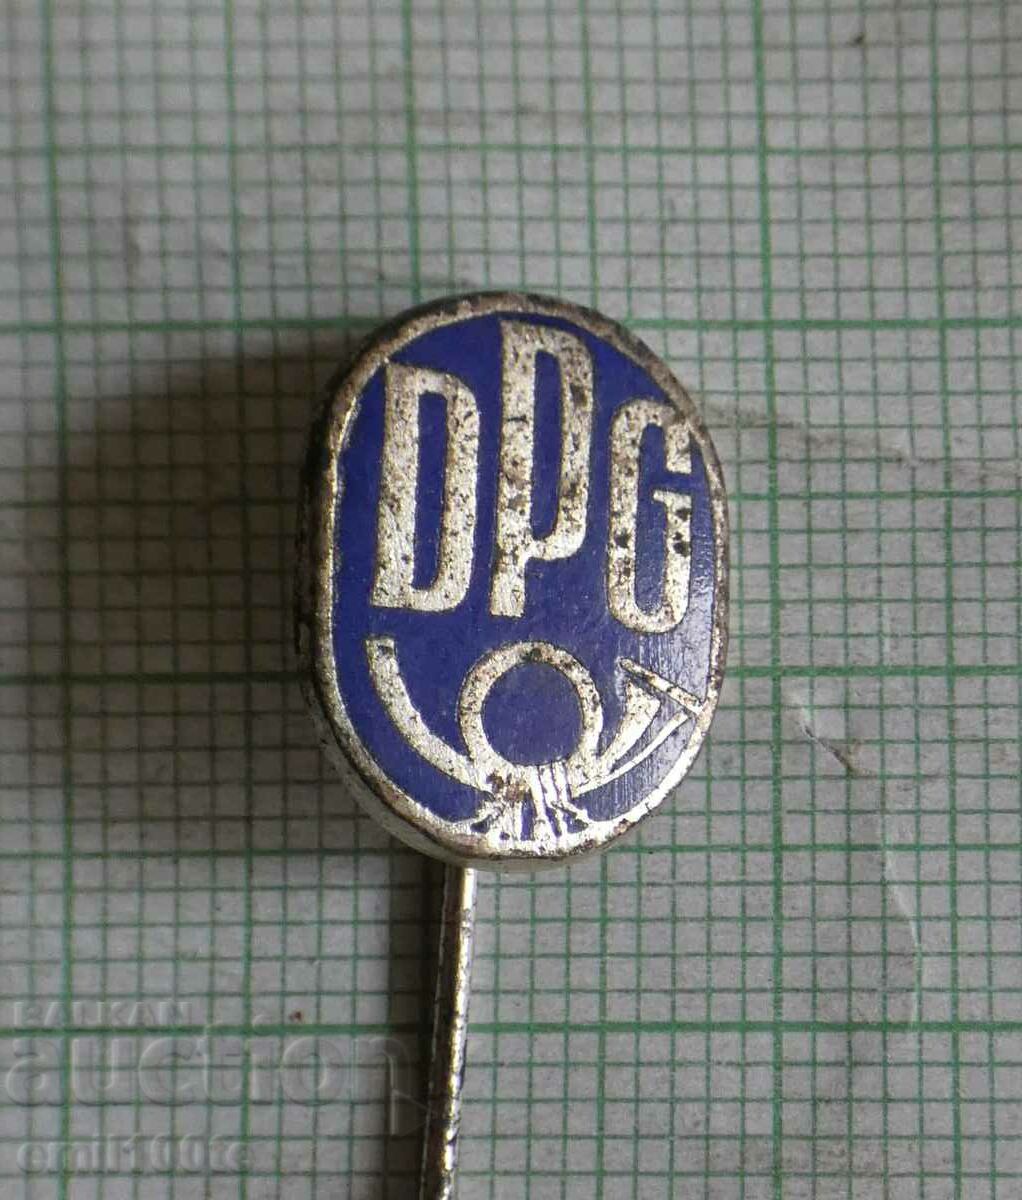 Badge - DPG German Postal Union